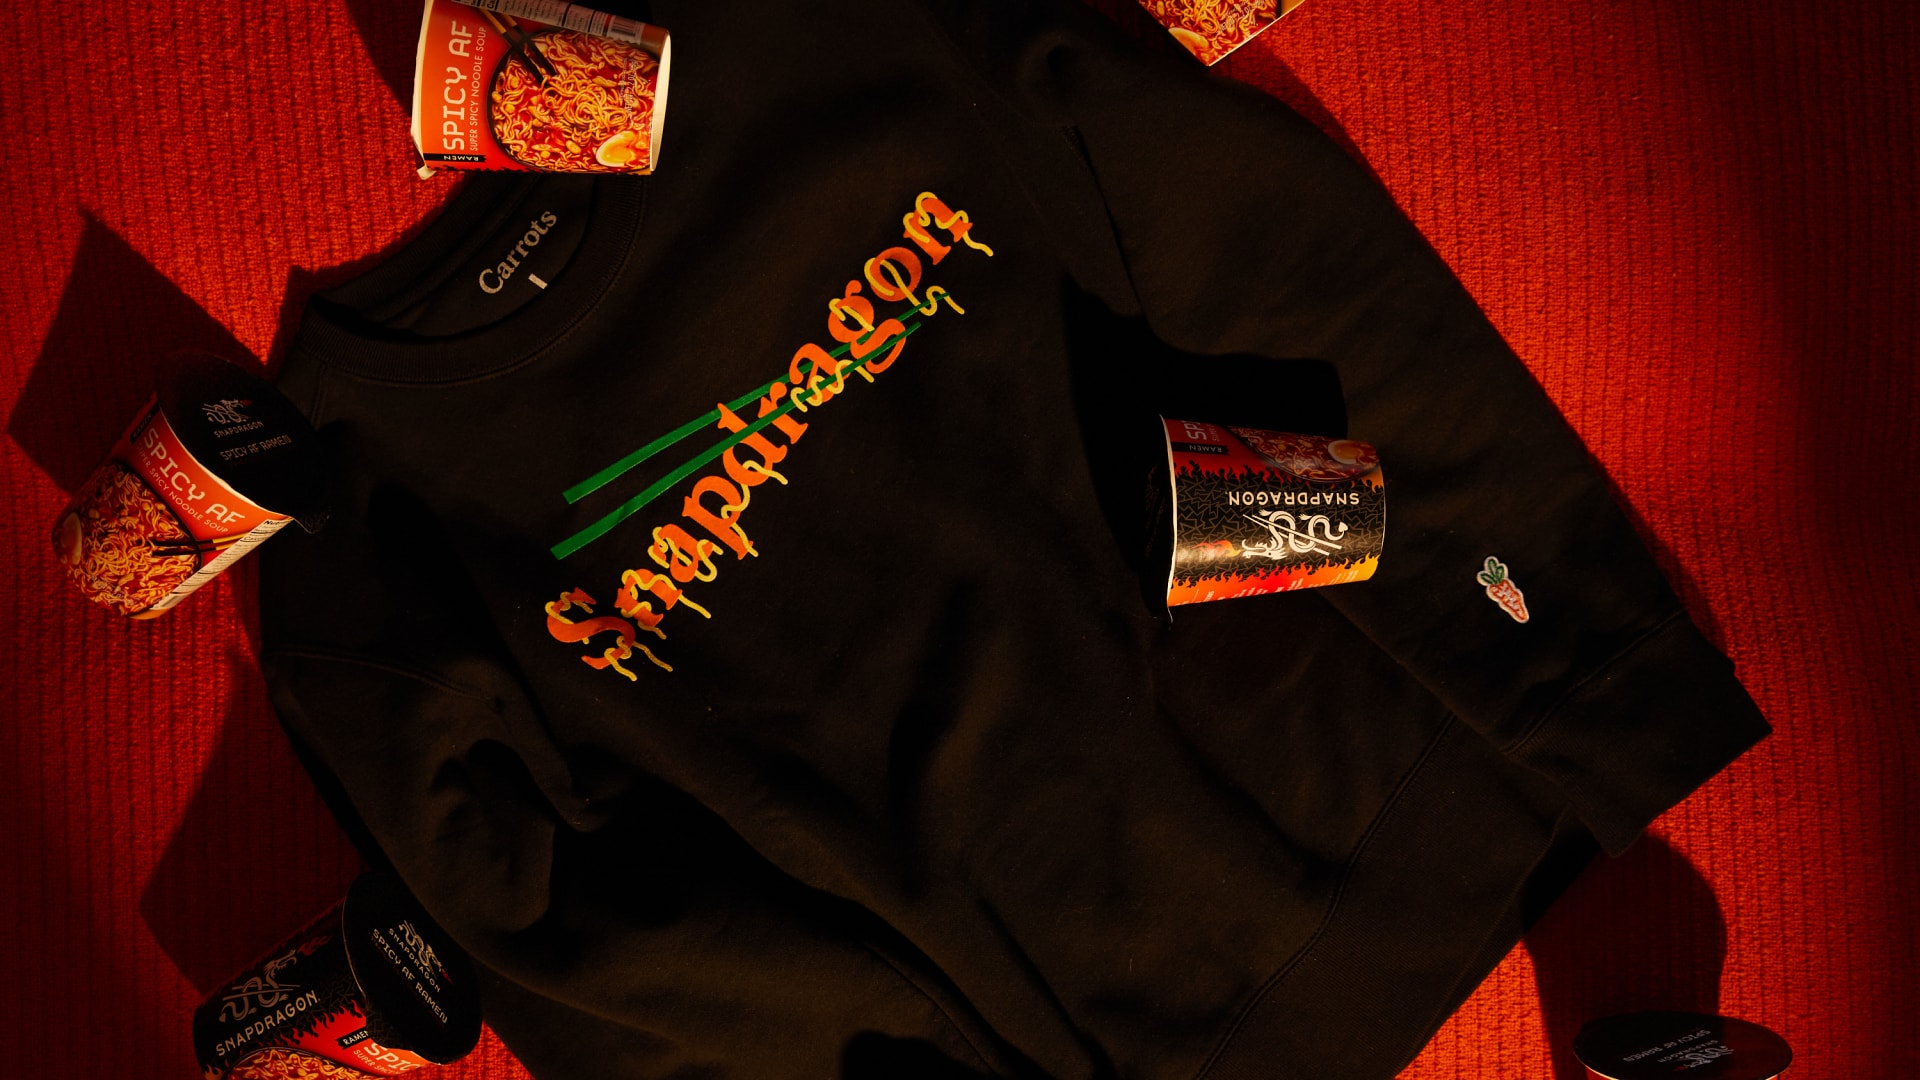 Snapdragon and Carrots Sweatshirt Collaboration black orange green streetwear hypebeast giveaway instant noodles ramen soo